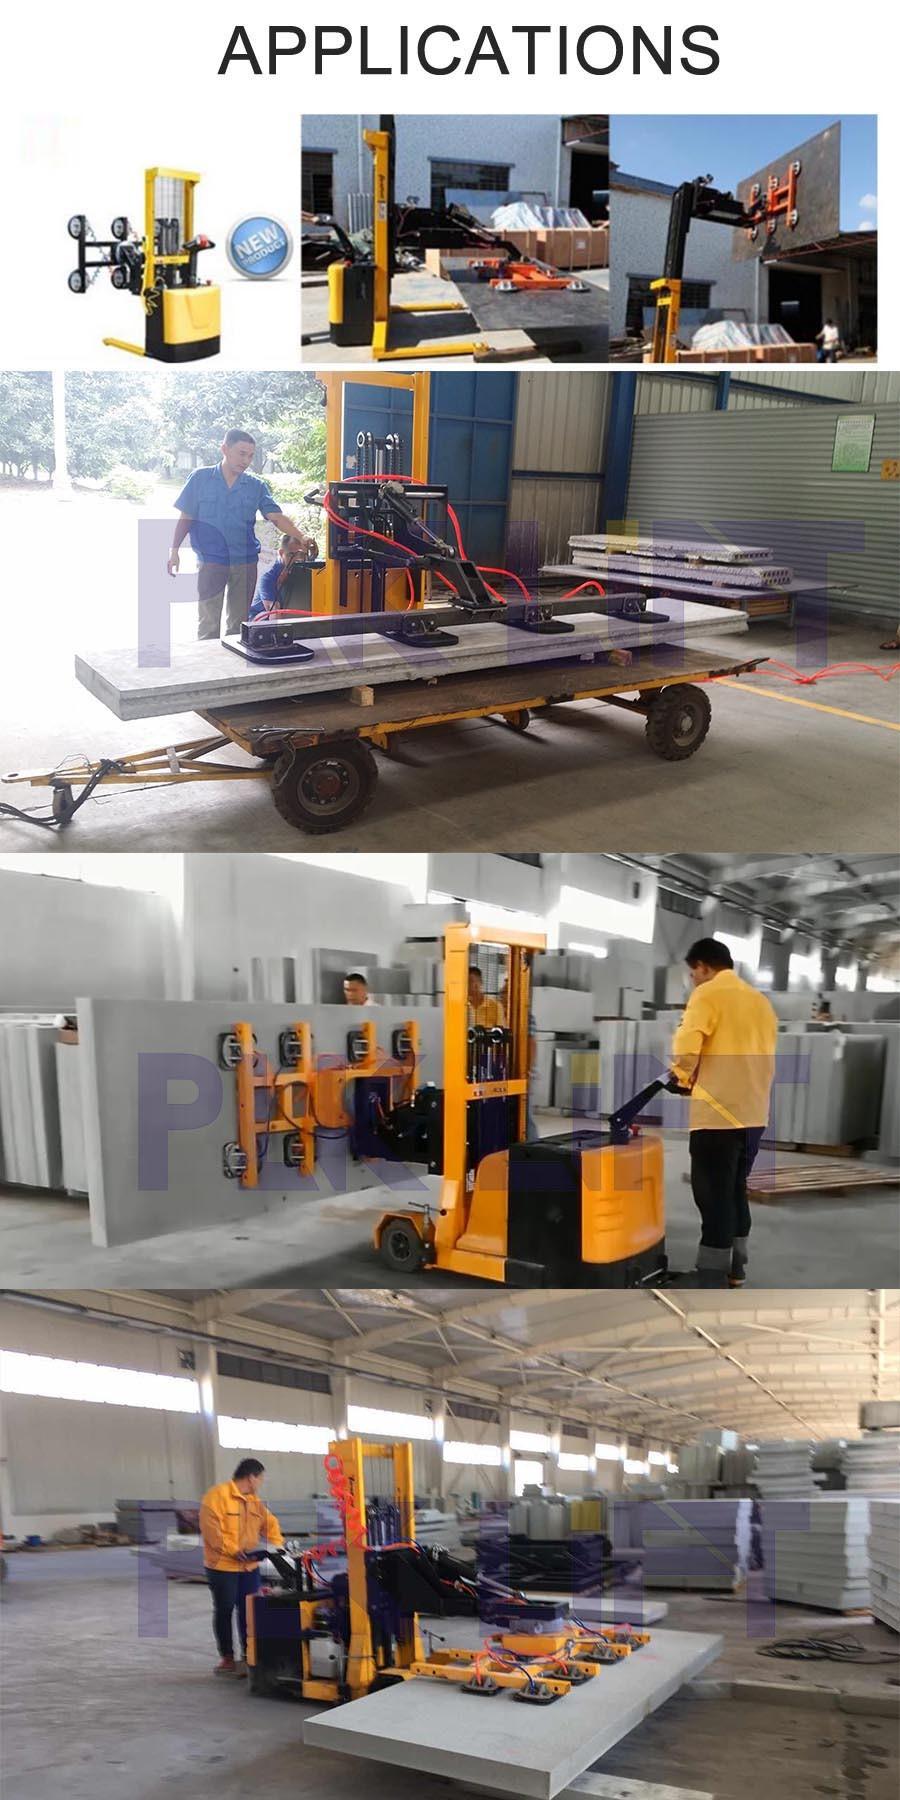 Plk 600kg Heavy Duty Glass Vacuum Lifter Machine Price